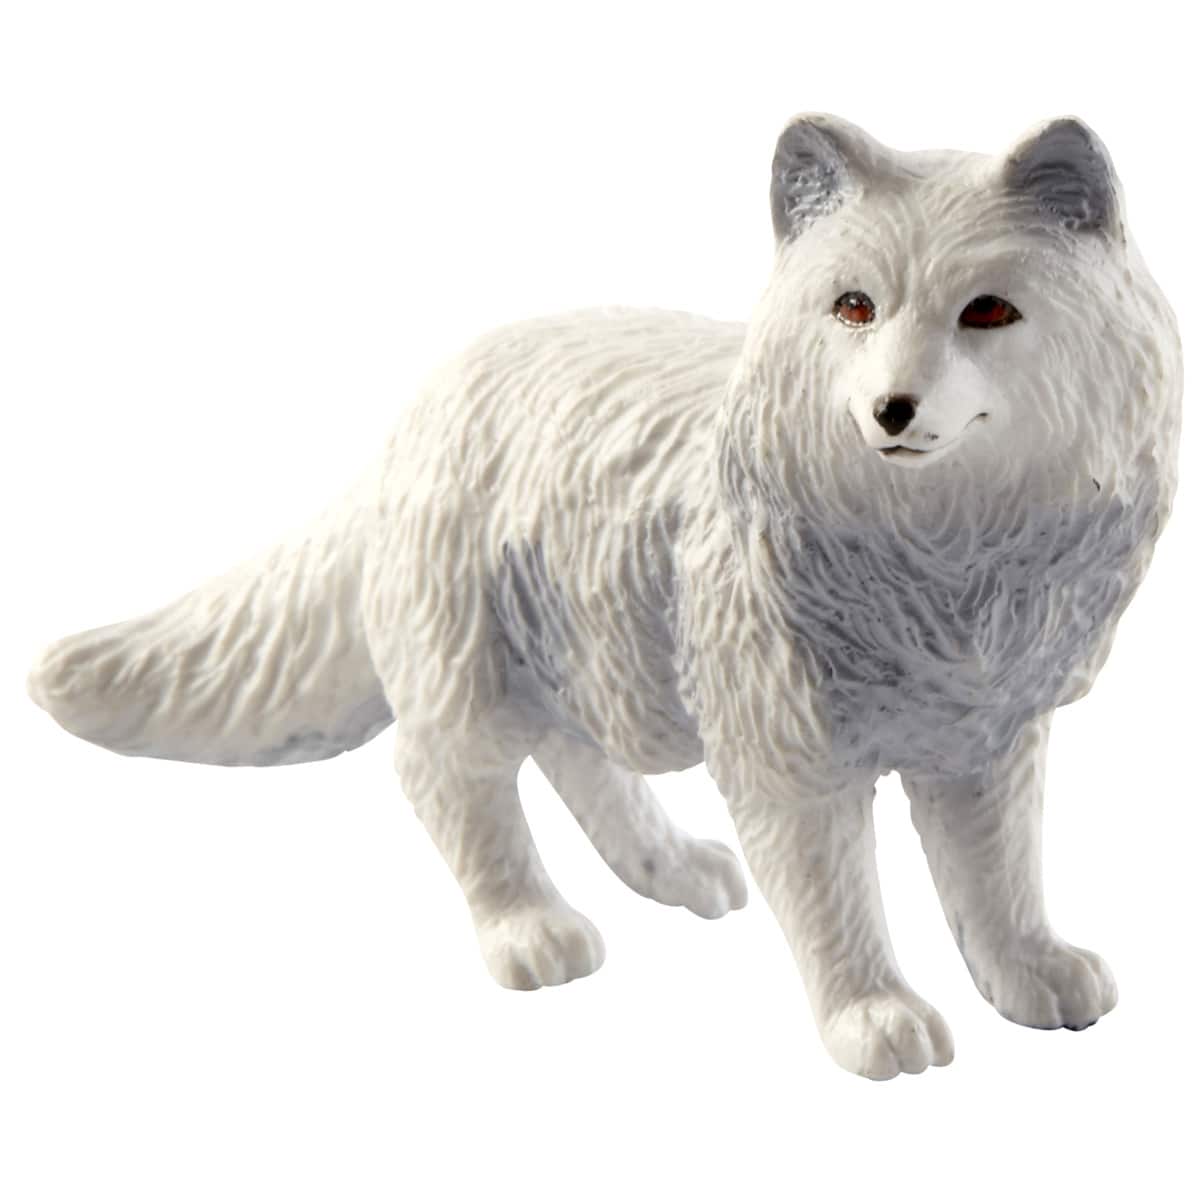 Safari Ltd 28232 3 inches long cool collectible Beautiful arctic Fox Figurine 